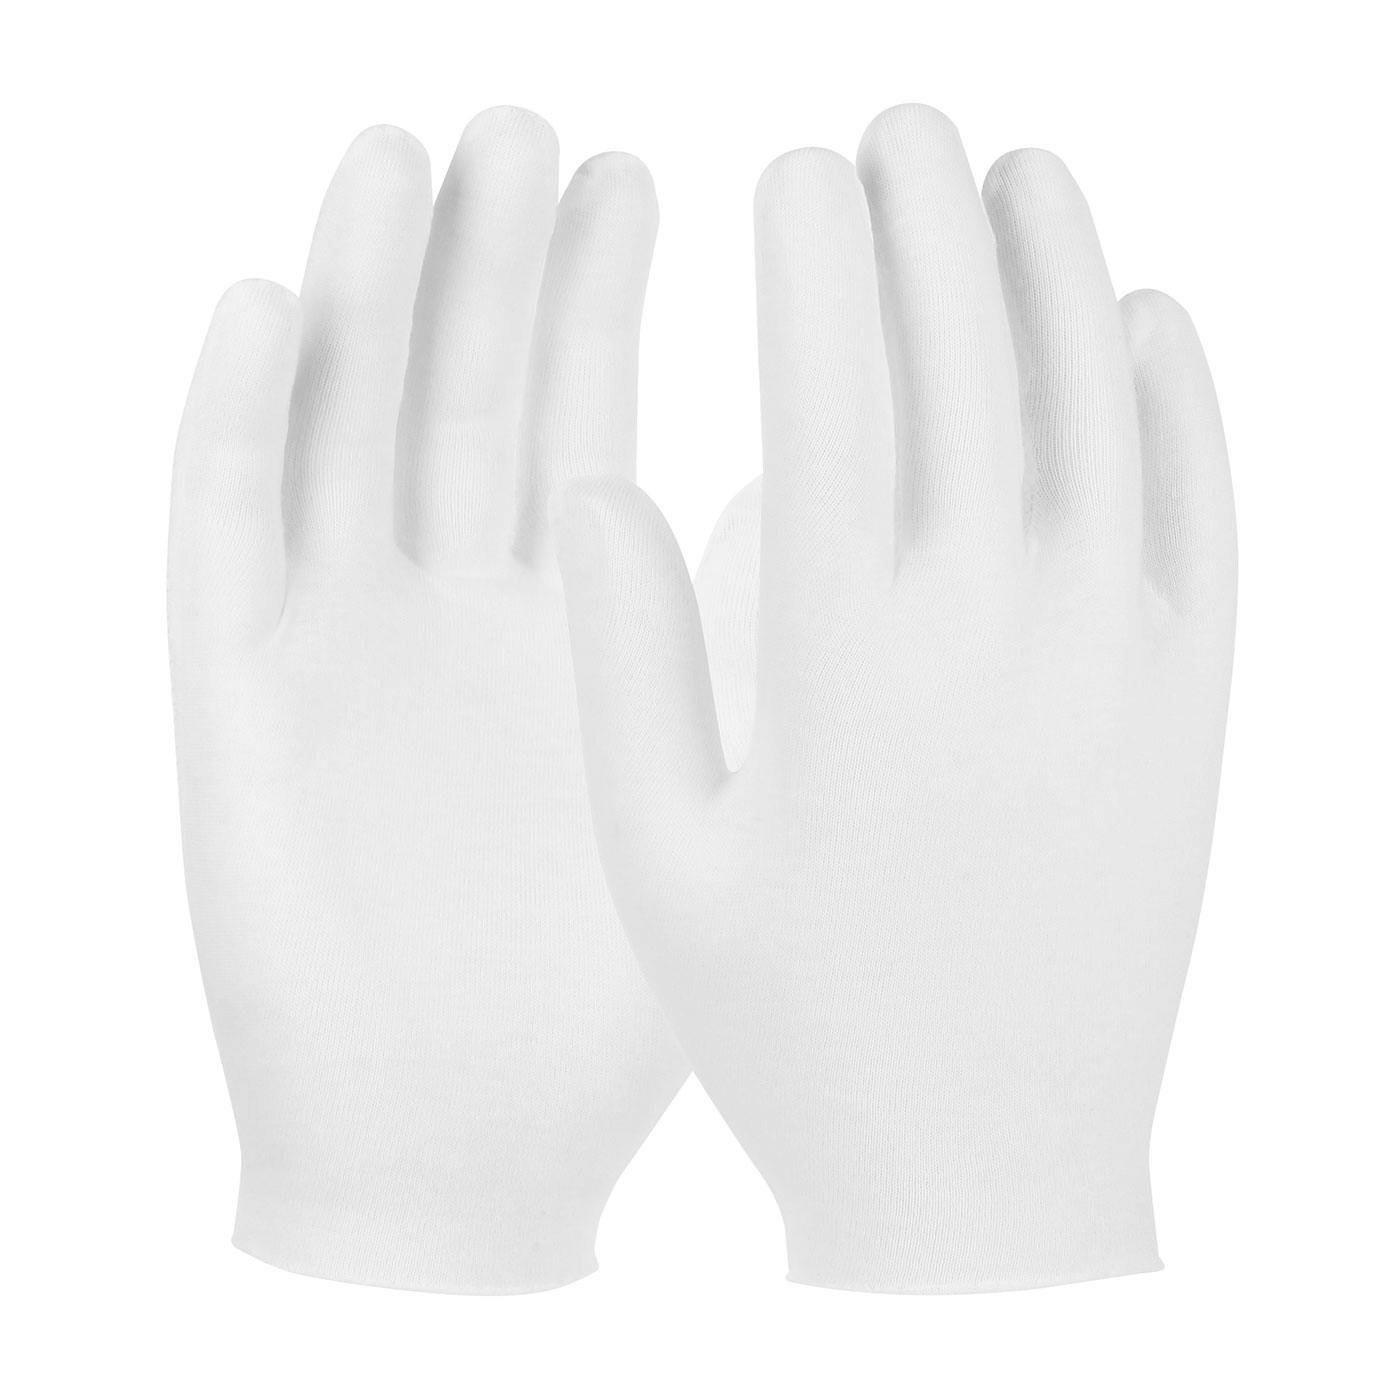 Medium Weight Cotton Lisle Inspection Glove with Unhemmed Cuff - Ladies', White (97-521) - LADIES